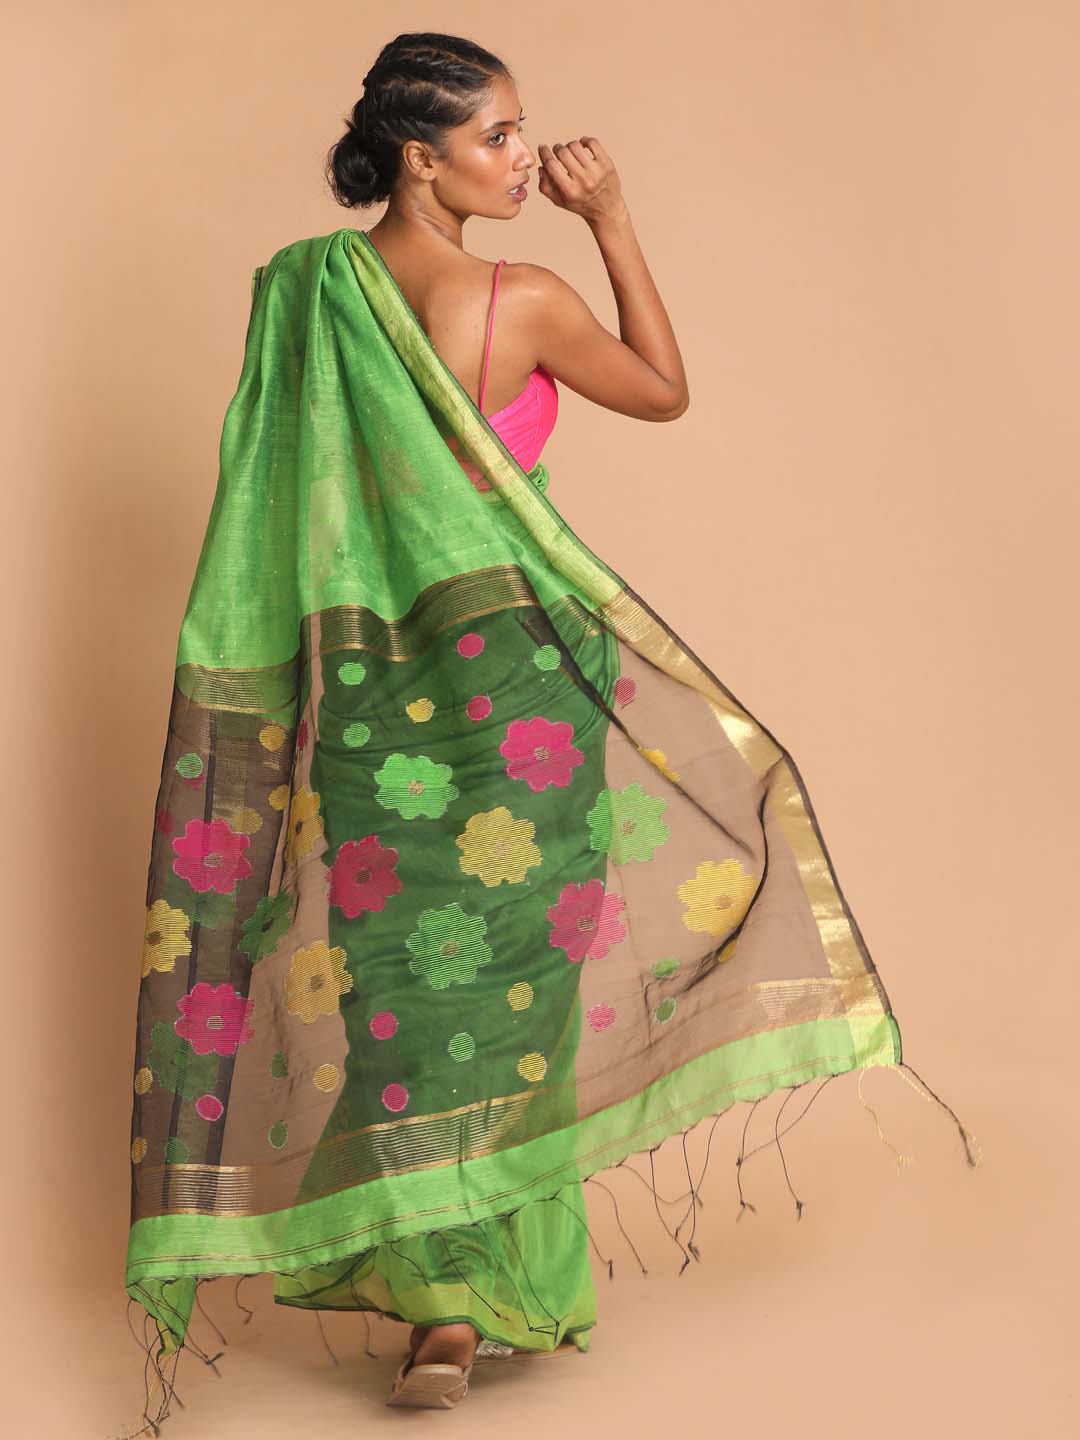 Indethnic Green Bengal Handloom Cotton Blend Work Saree - View 3